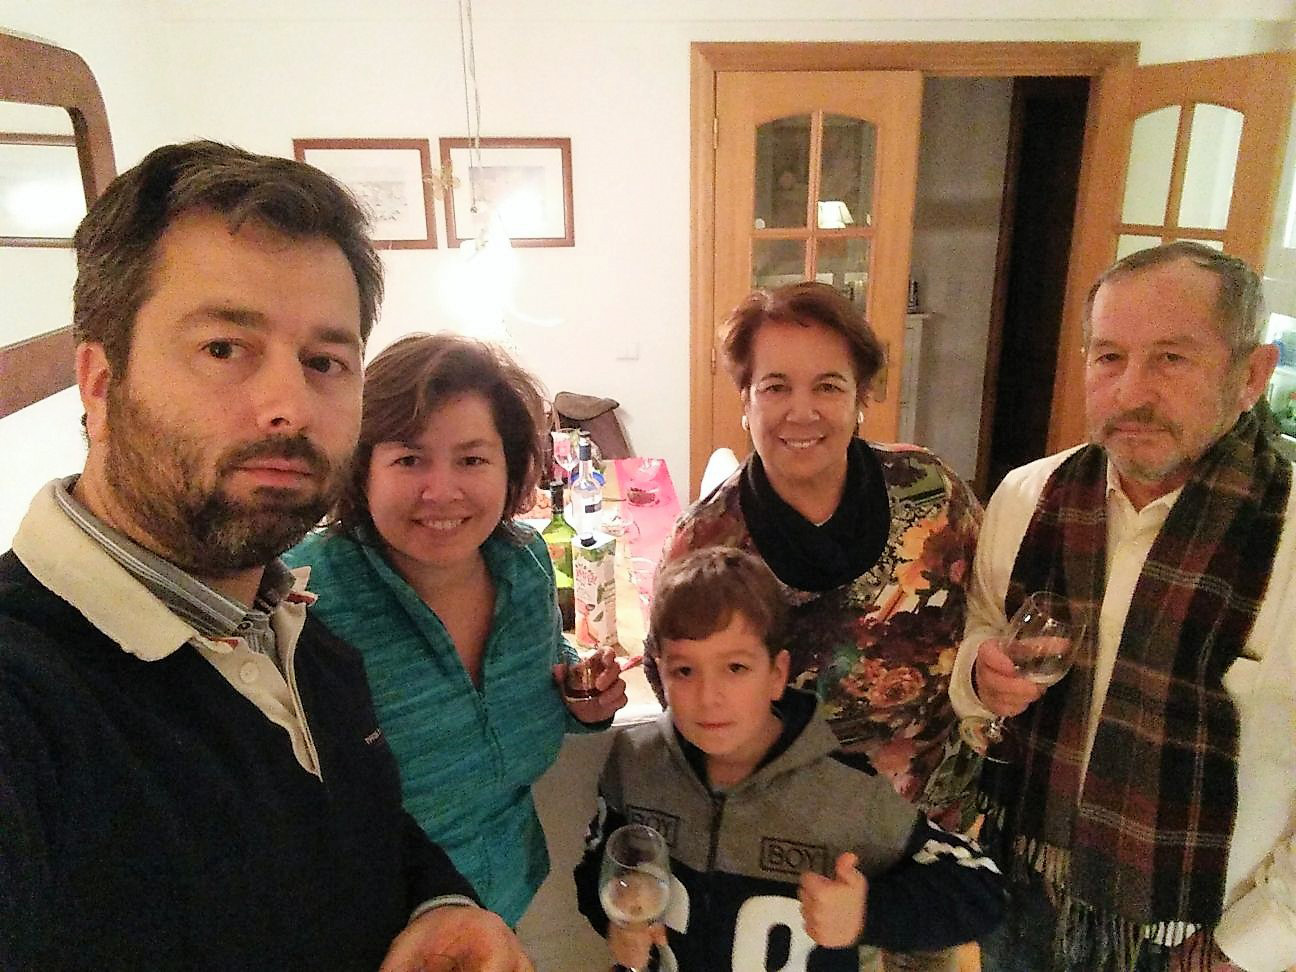 Luzia Machado and her family